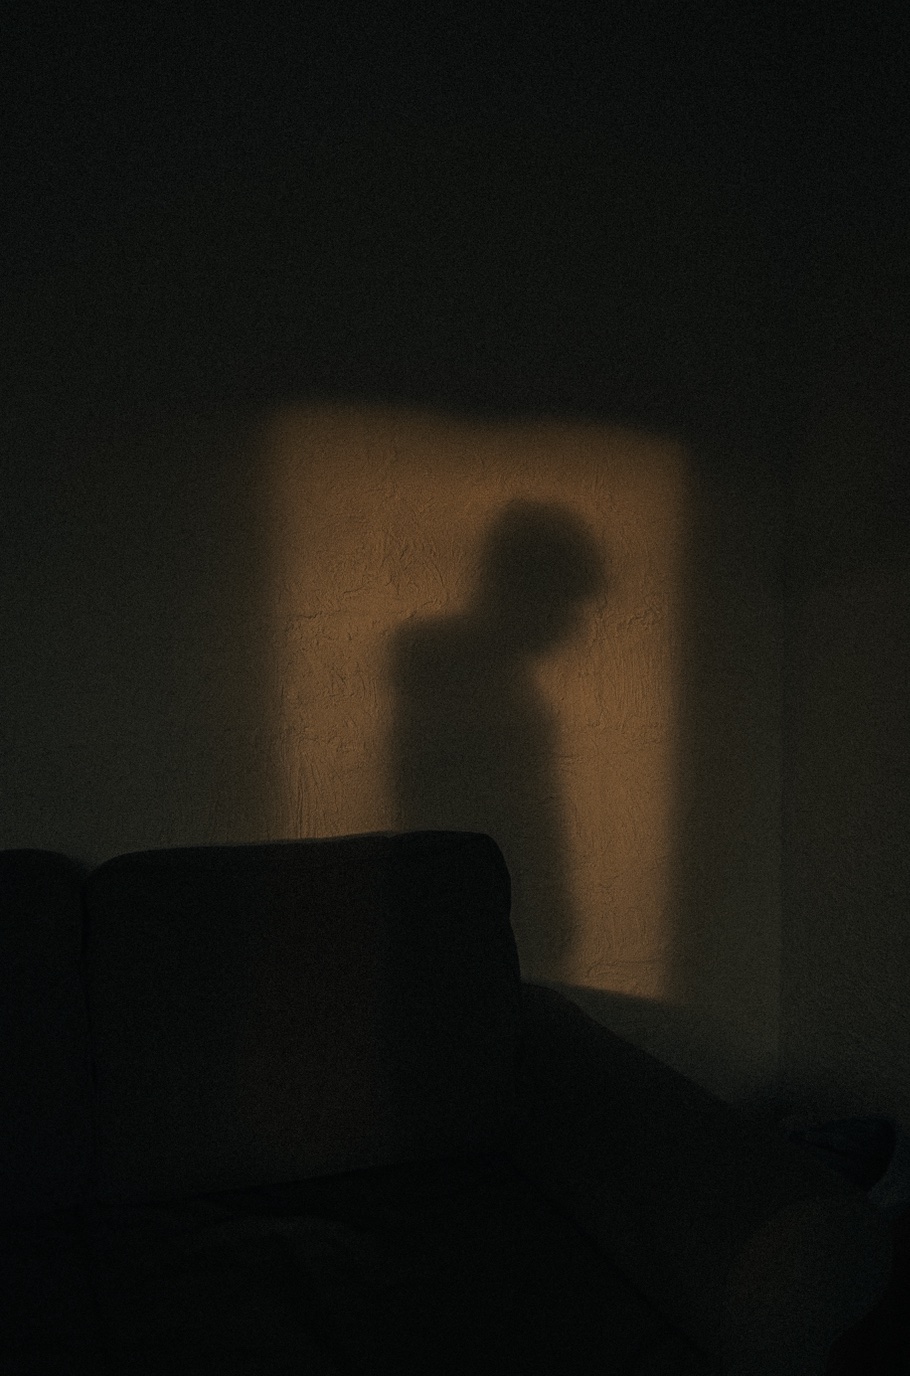 Shadow of a boy in a lit doorway; image by Majestic Lukas, via Unsplash.com.